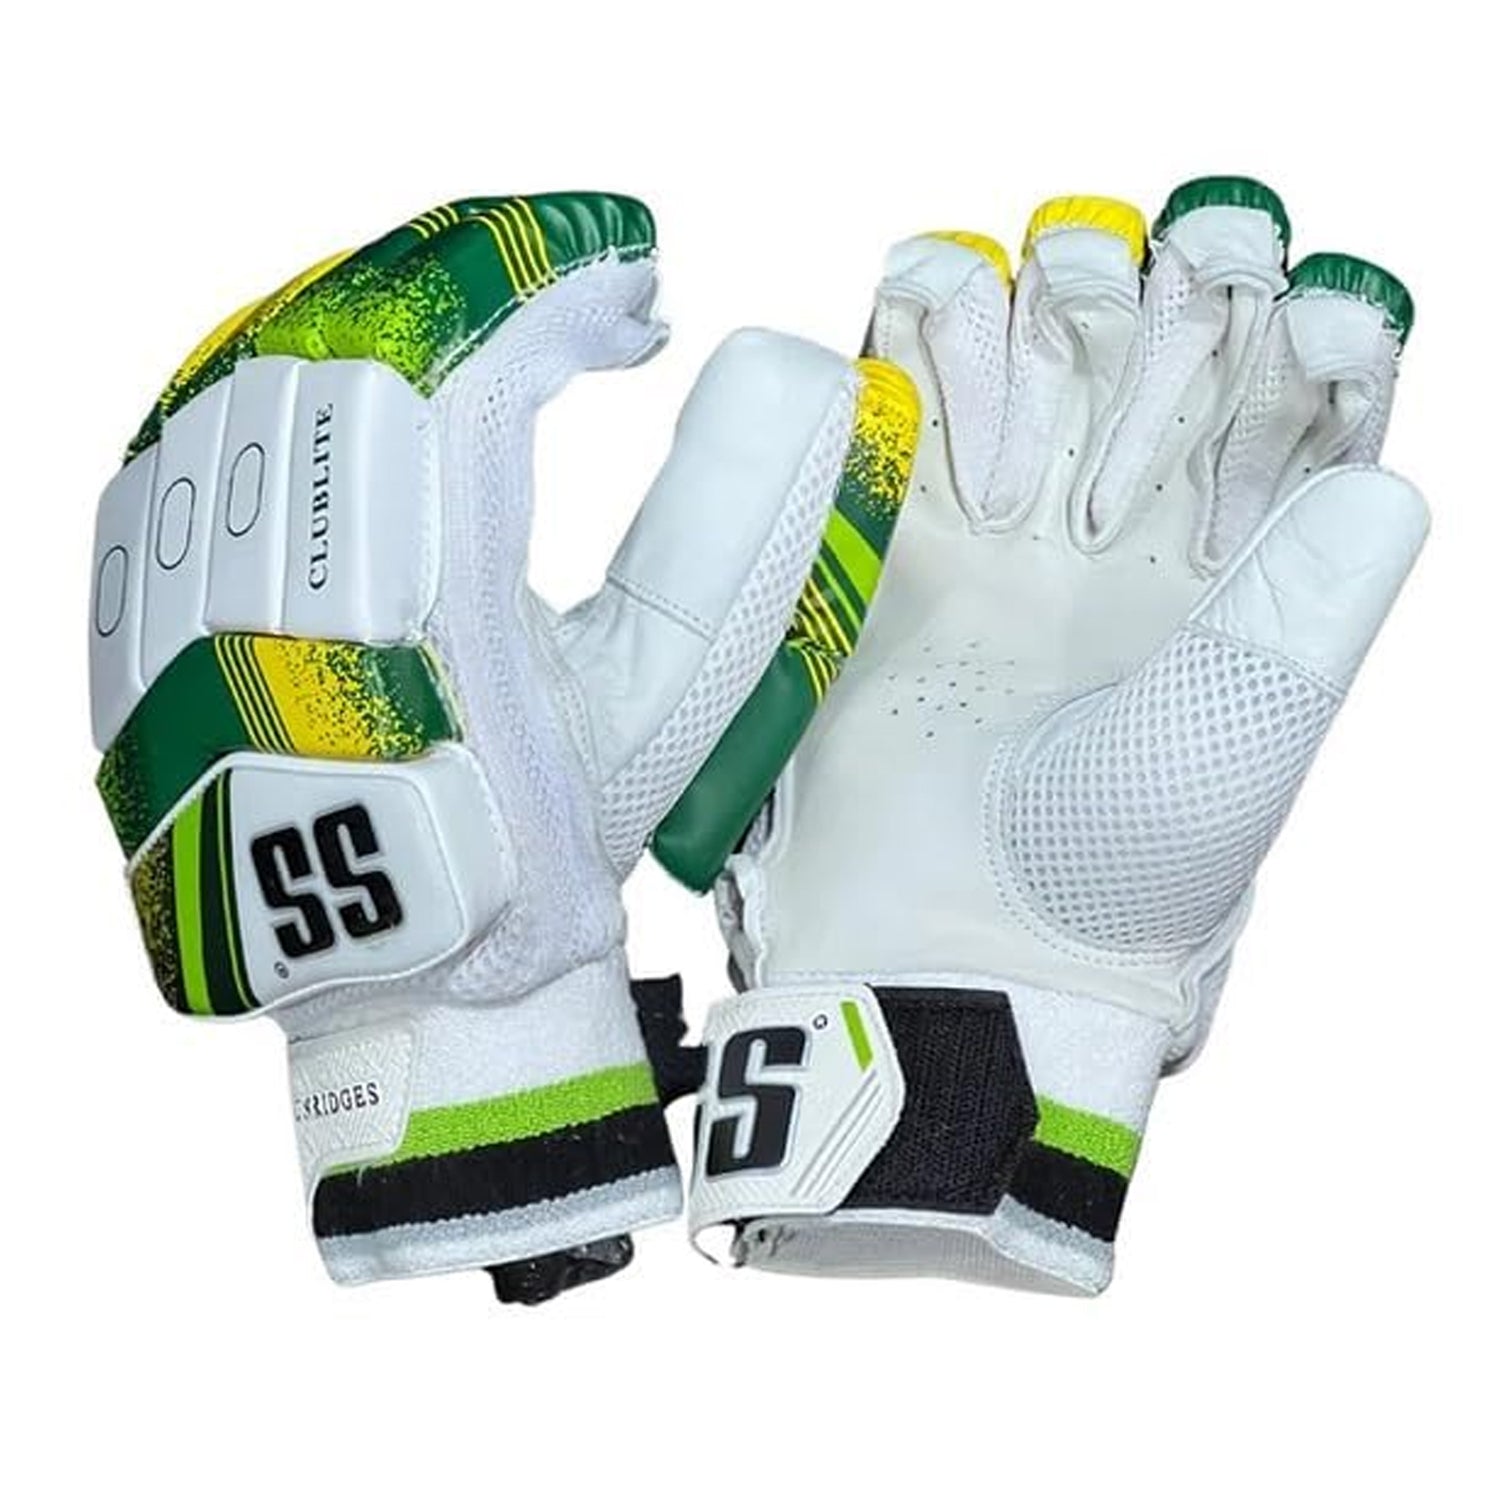 SS Club Lite RH Batting Gloves, White/Yellow - Best Price online Prokicksports.com